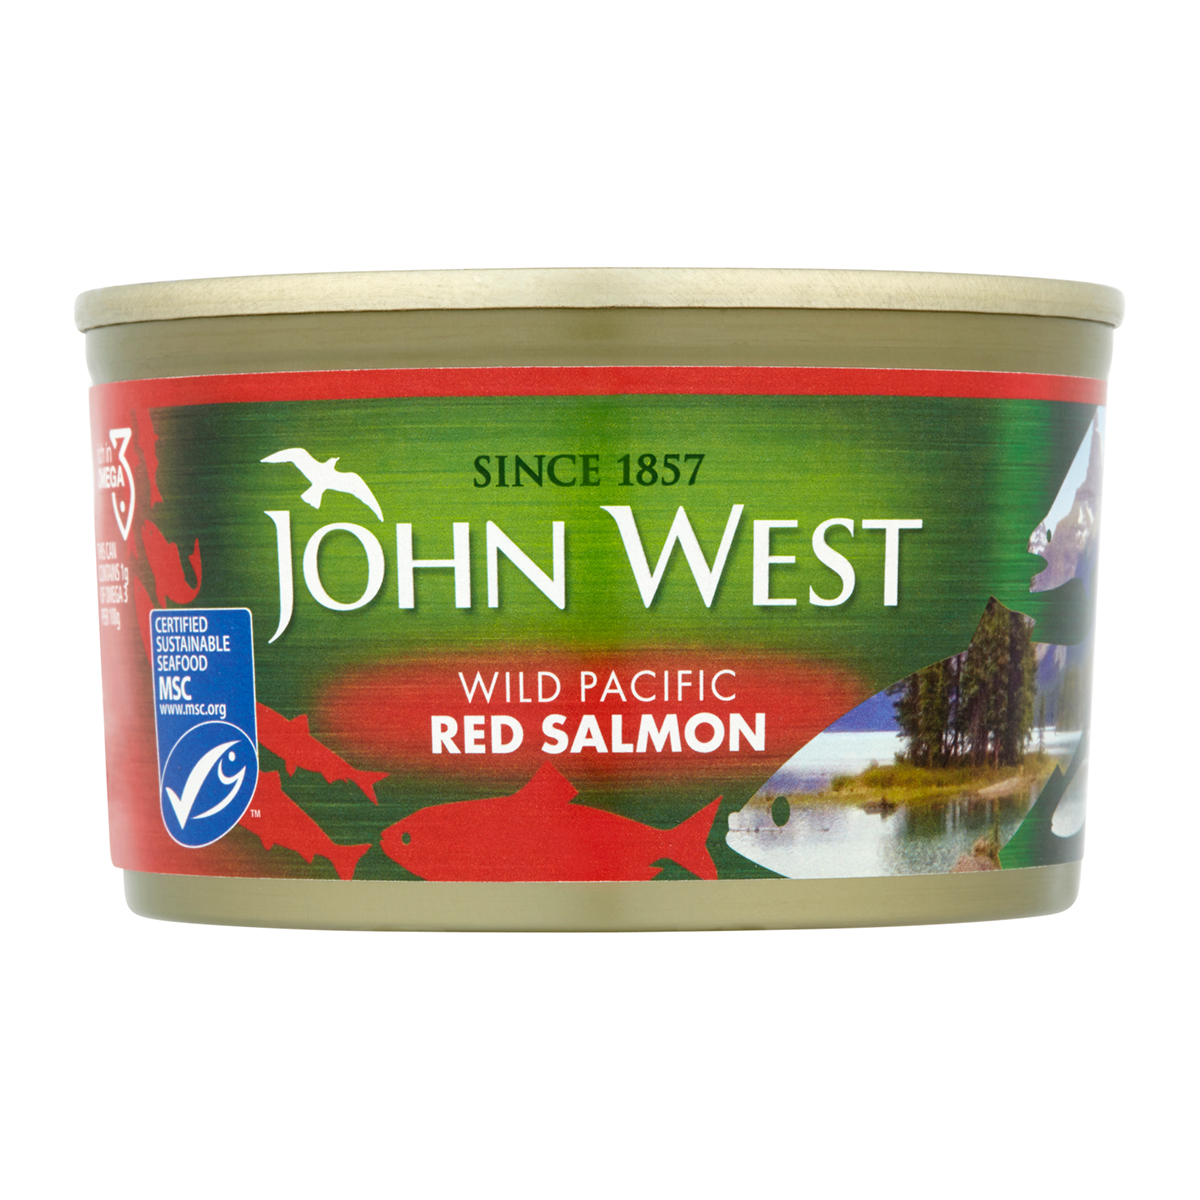 John West Wild Pacific Red Salmon, 3 x 216g